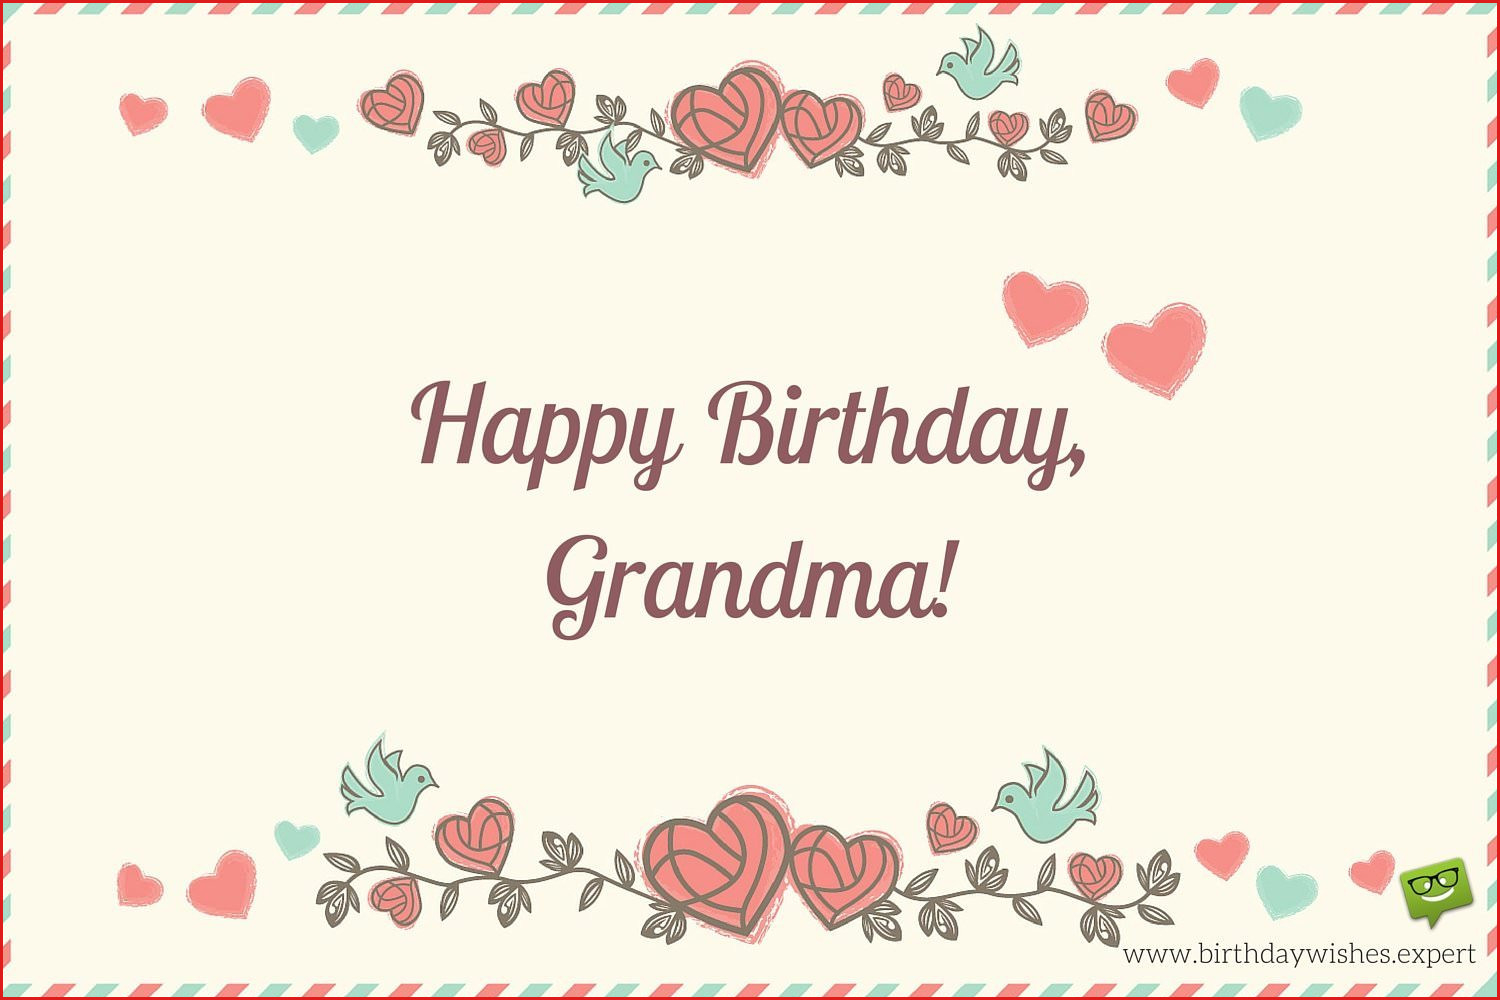 Birthday Card Ideas For Grandma The 25 Best Happy Birthday Grandma Ideas On Pinterest Birthday Cards